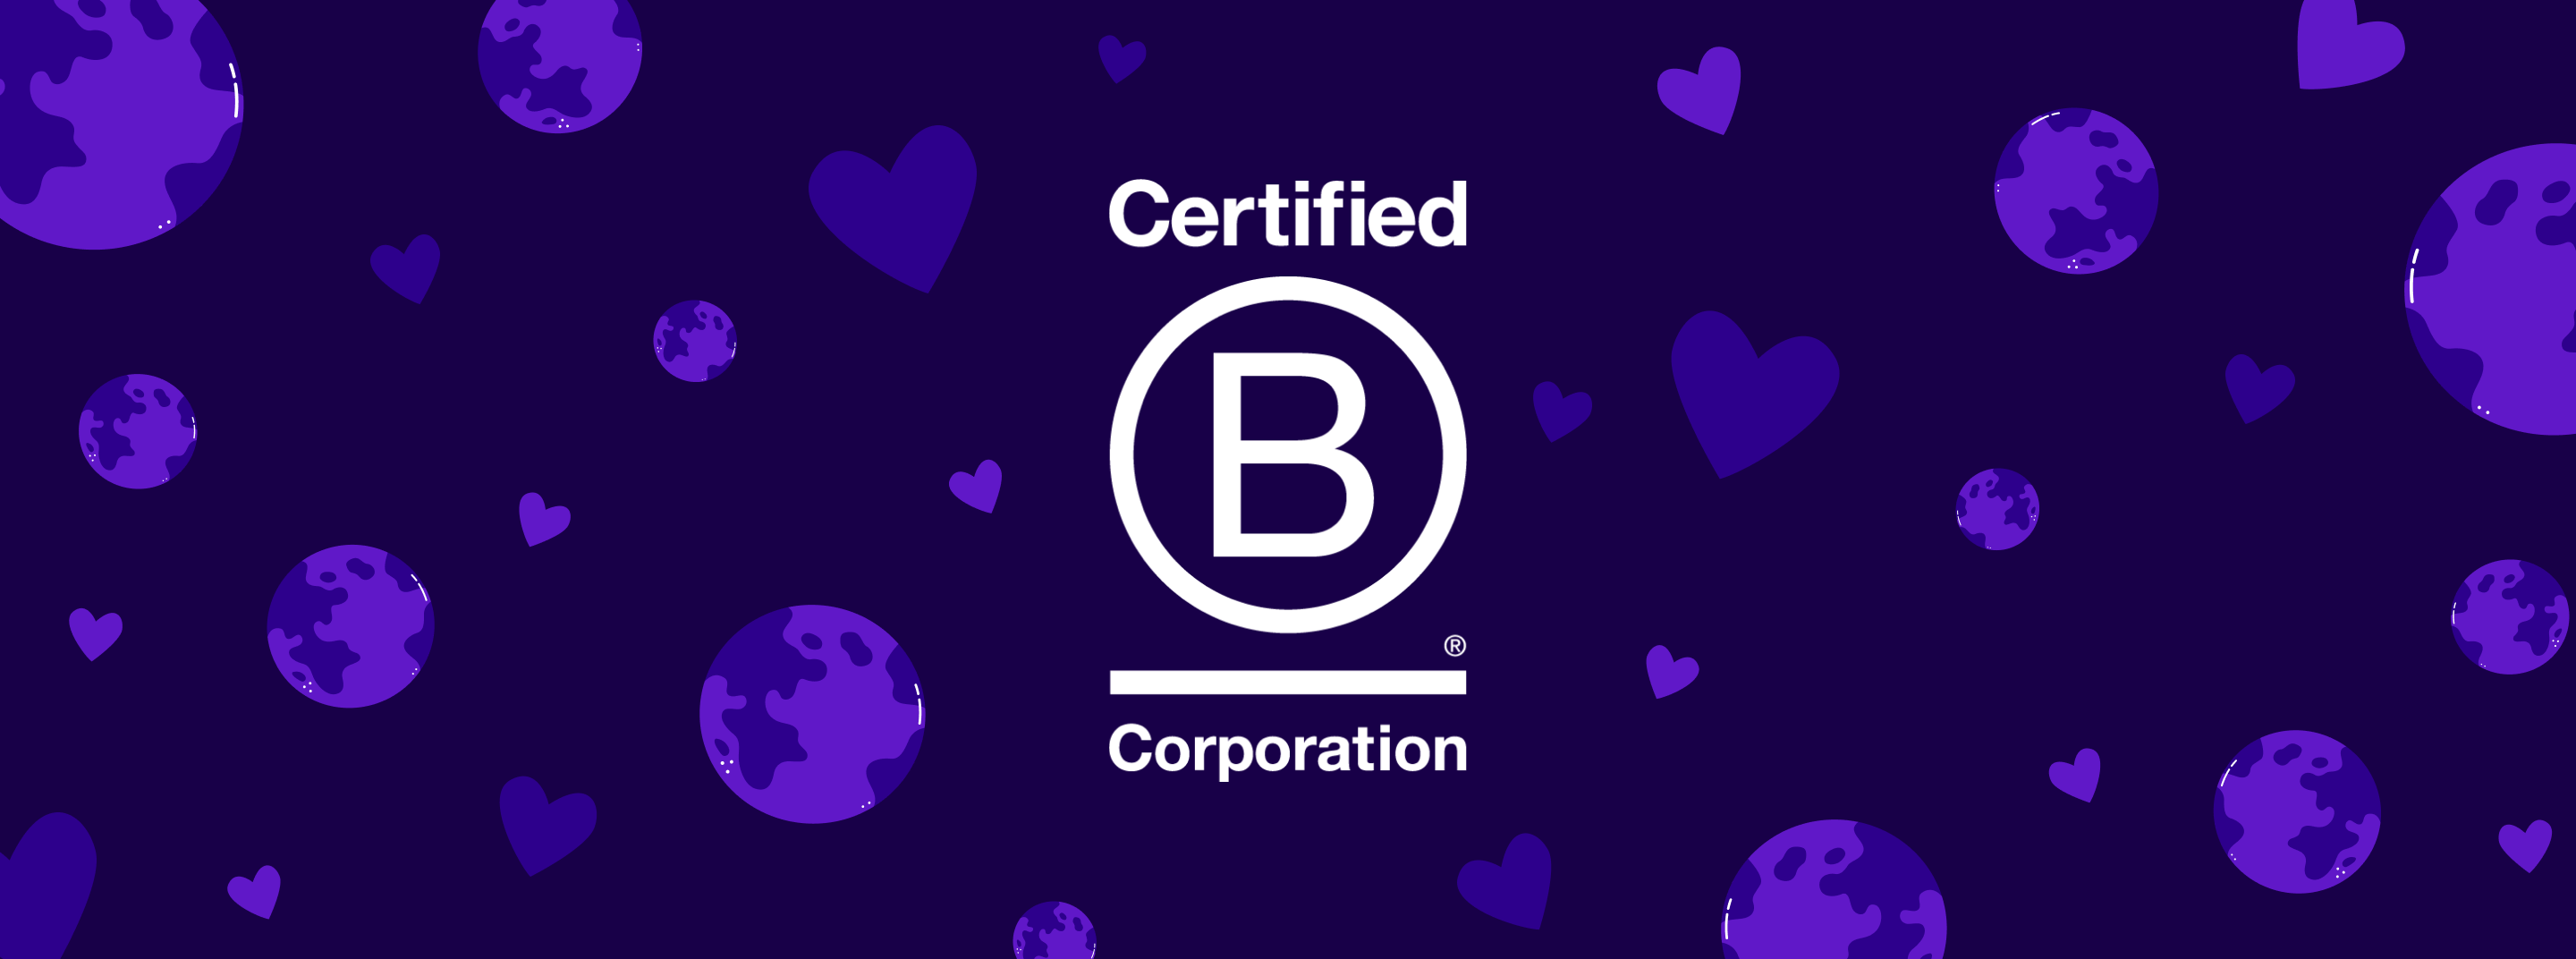 White B Corp logo on a dark purple background